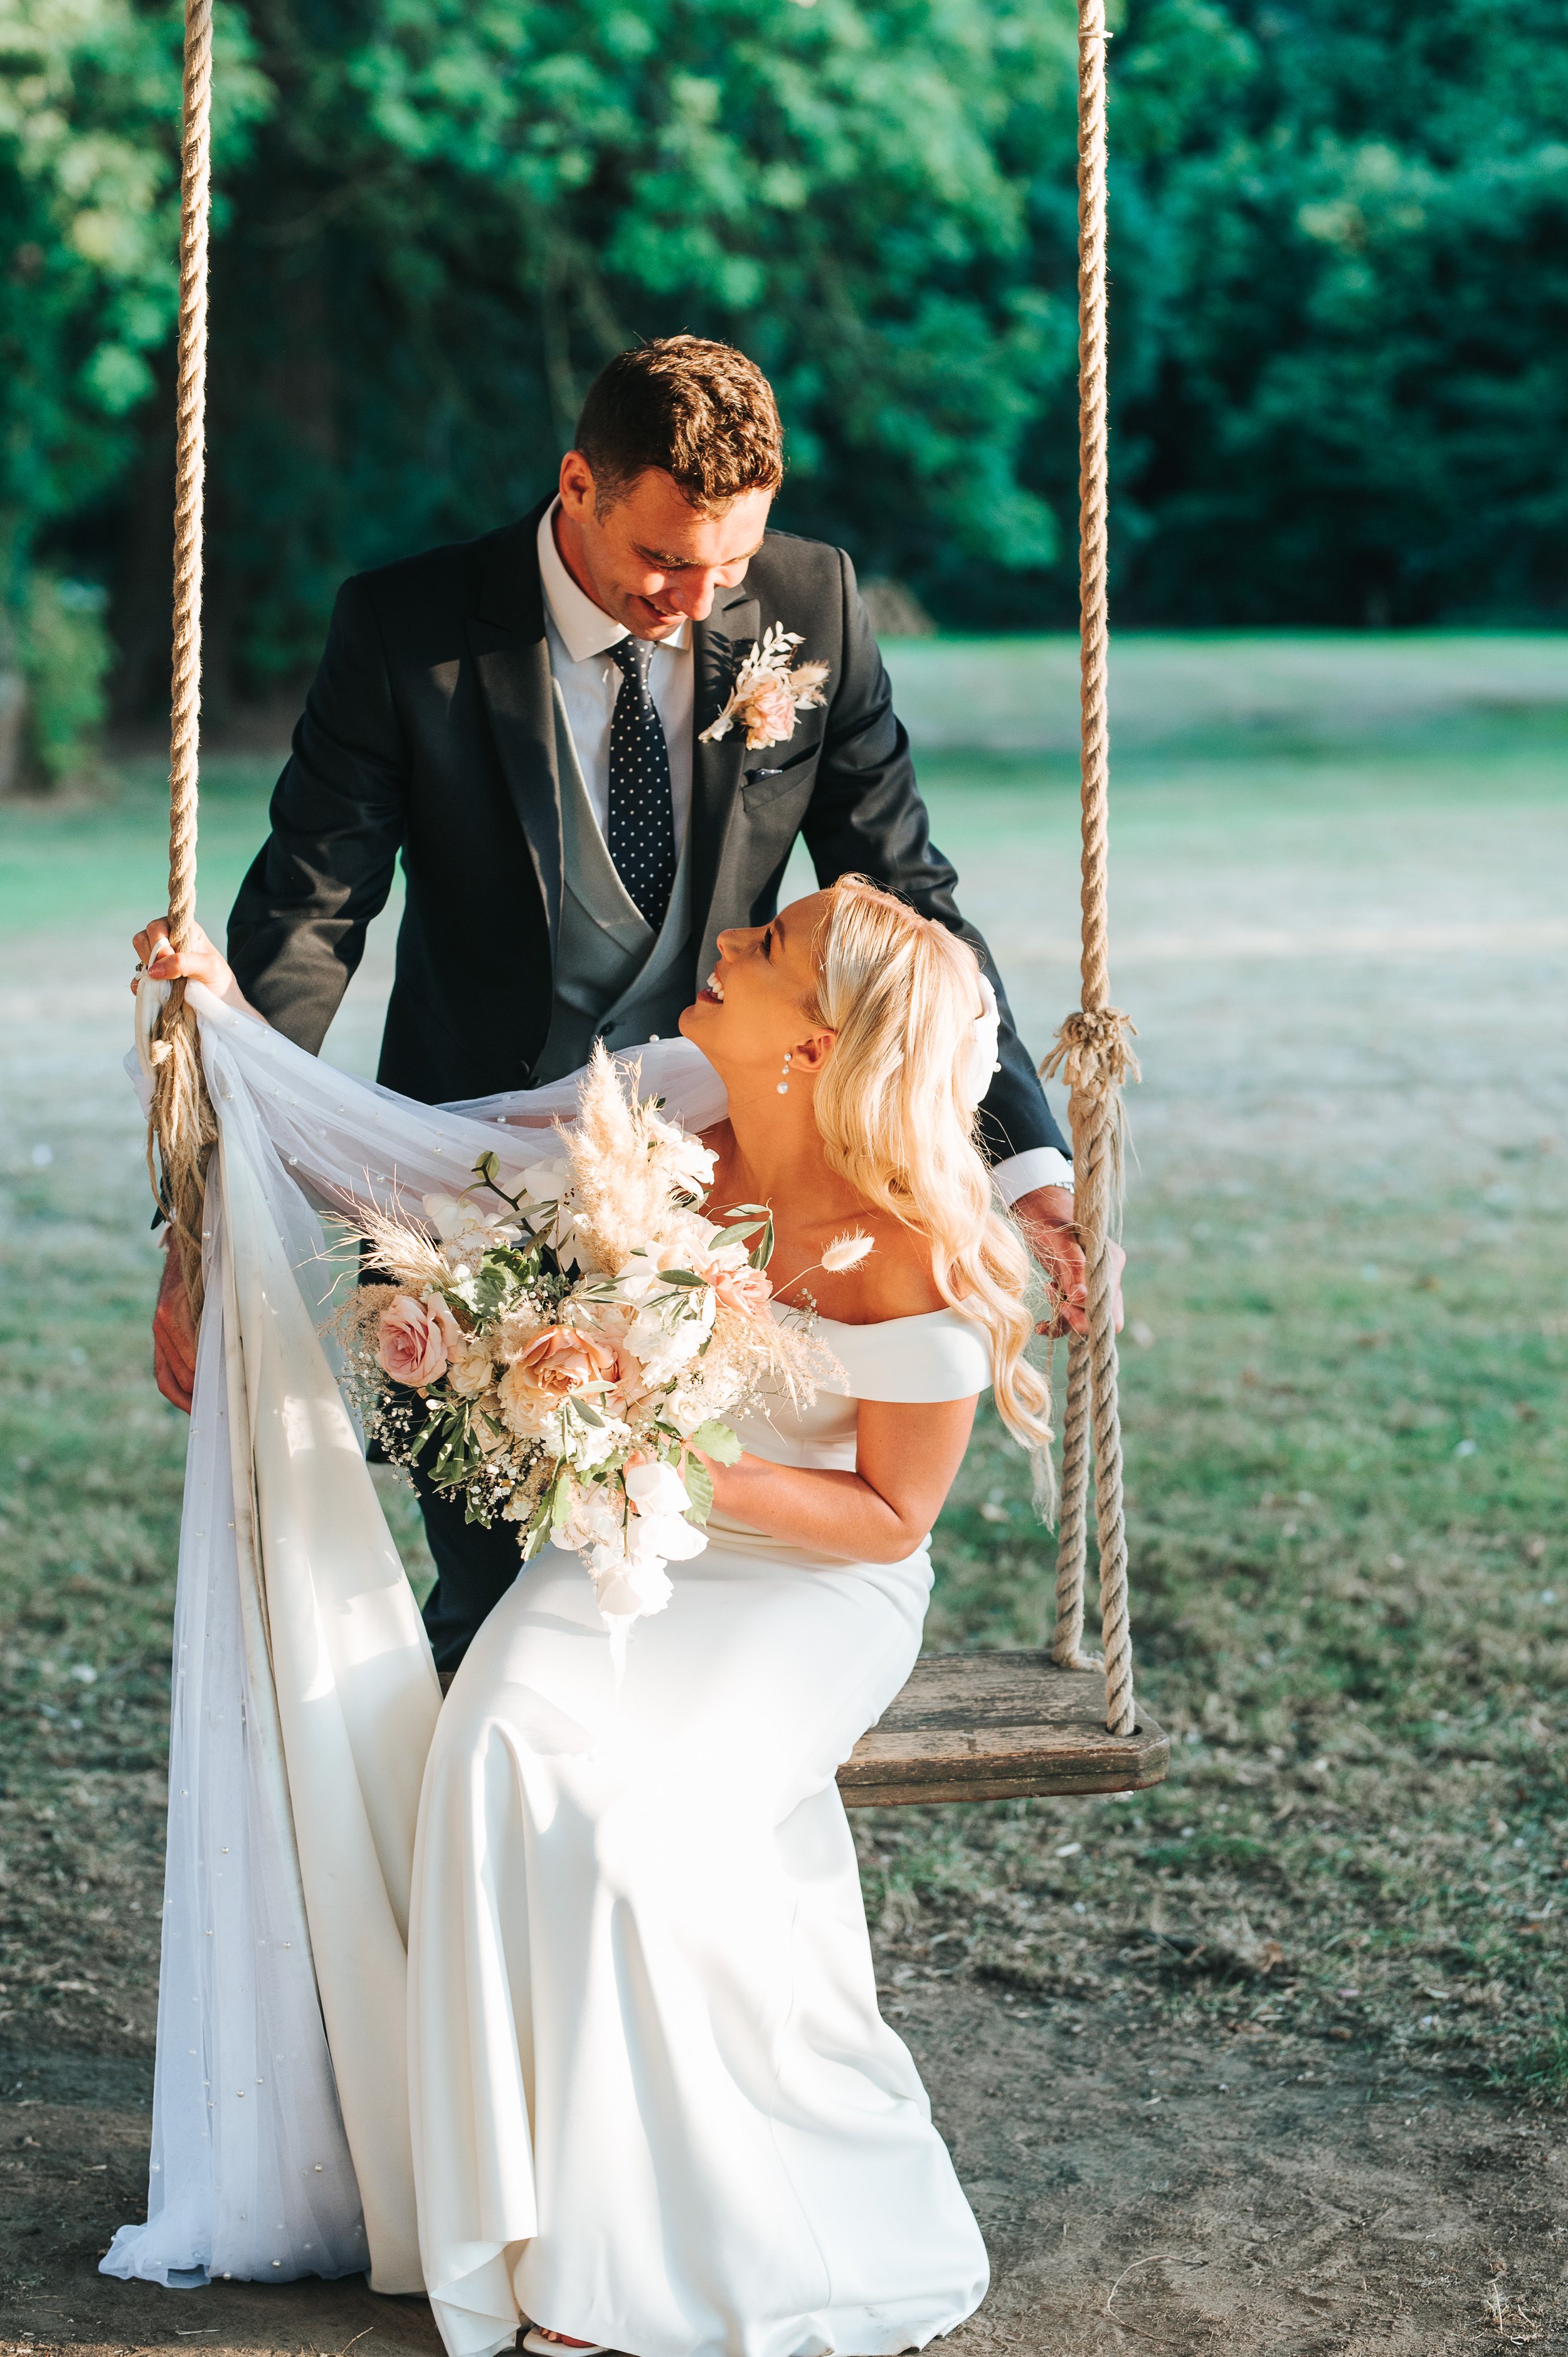 Wedding couple on a swing